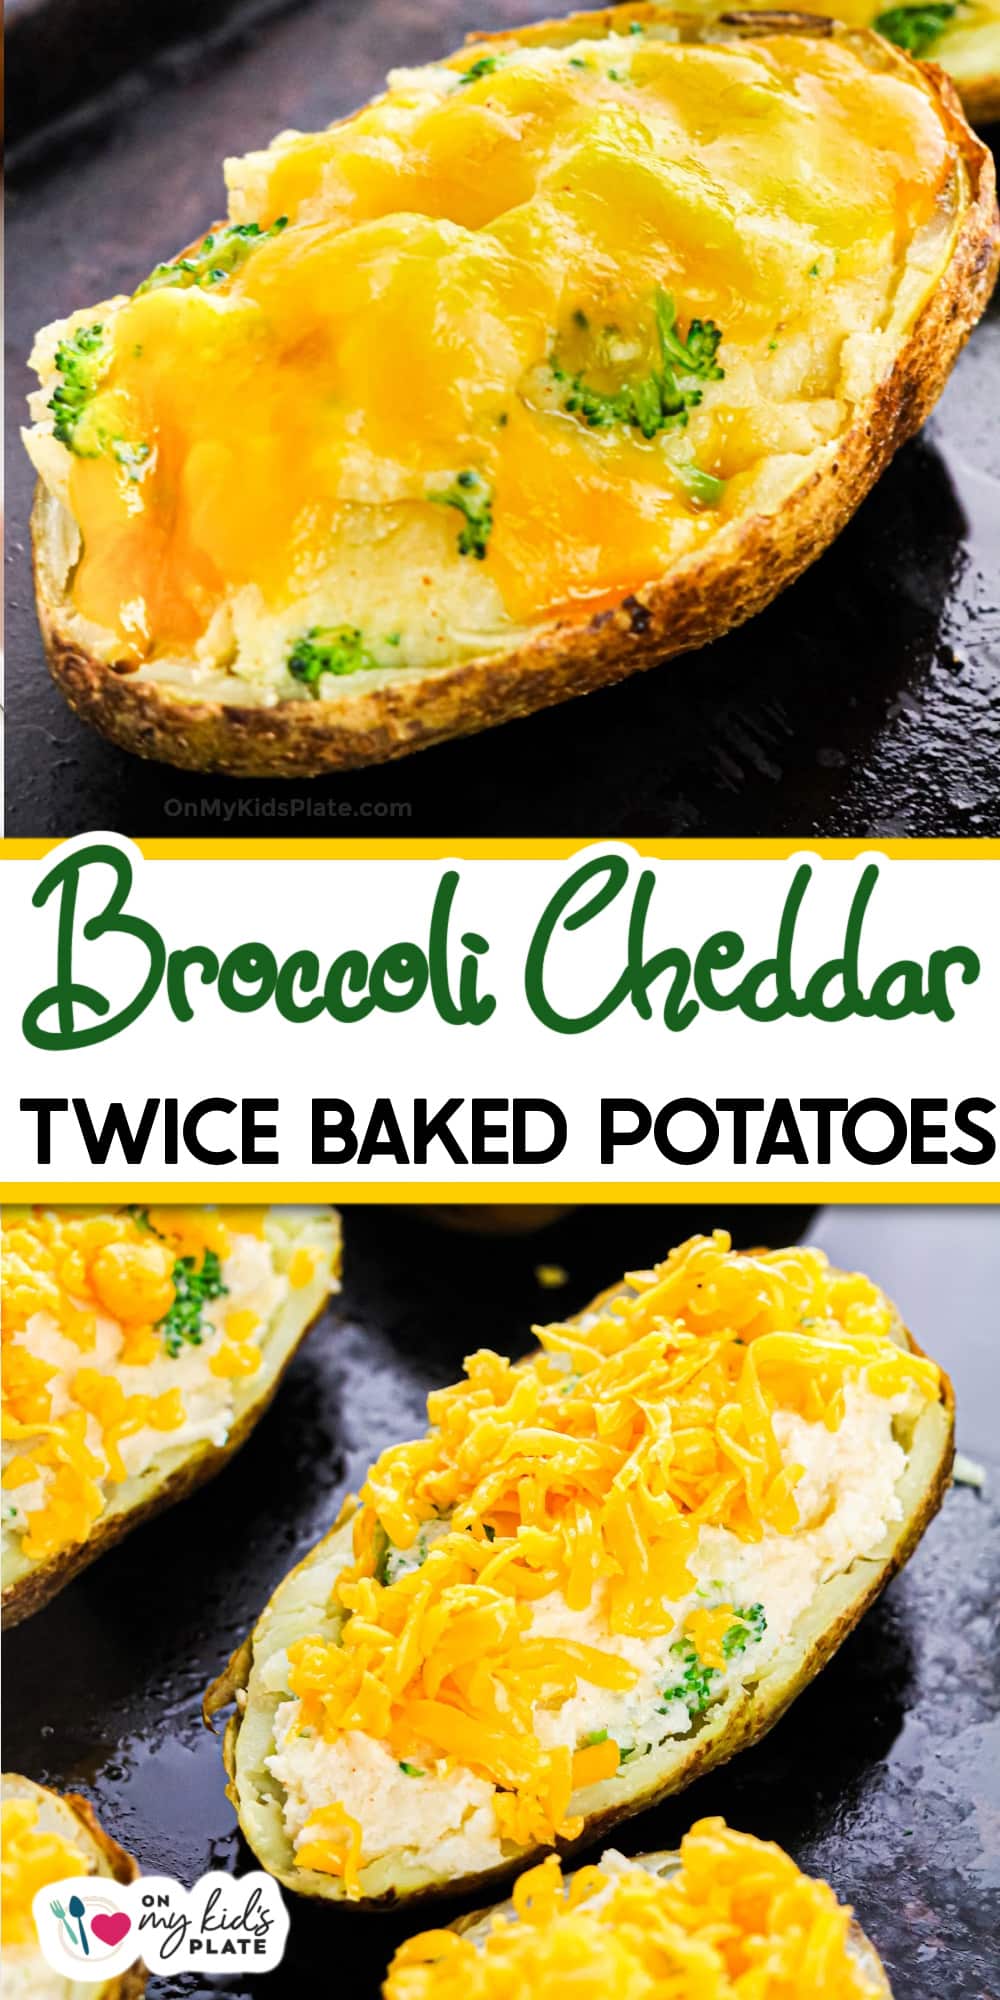 Stuffed Cheddar Broccoli Twice Baked Potato - On My Kids Plate